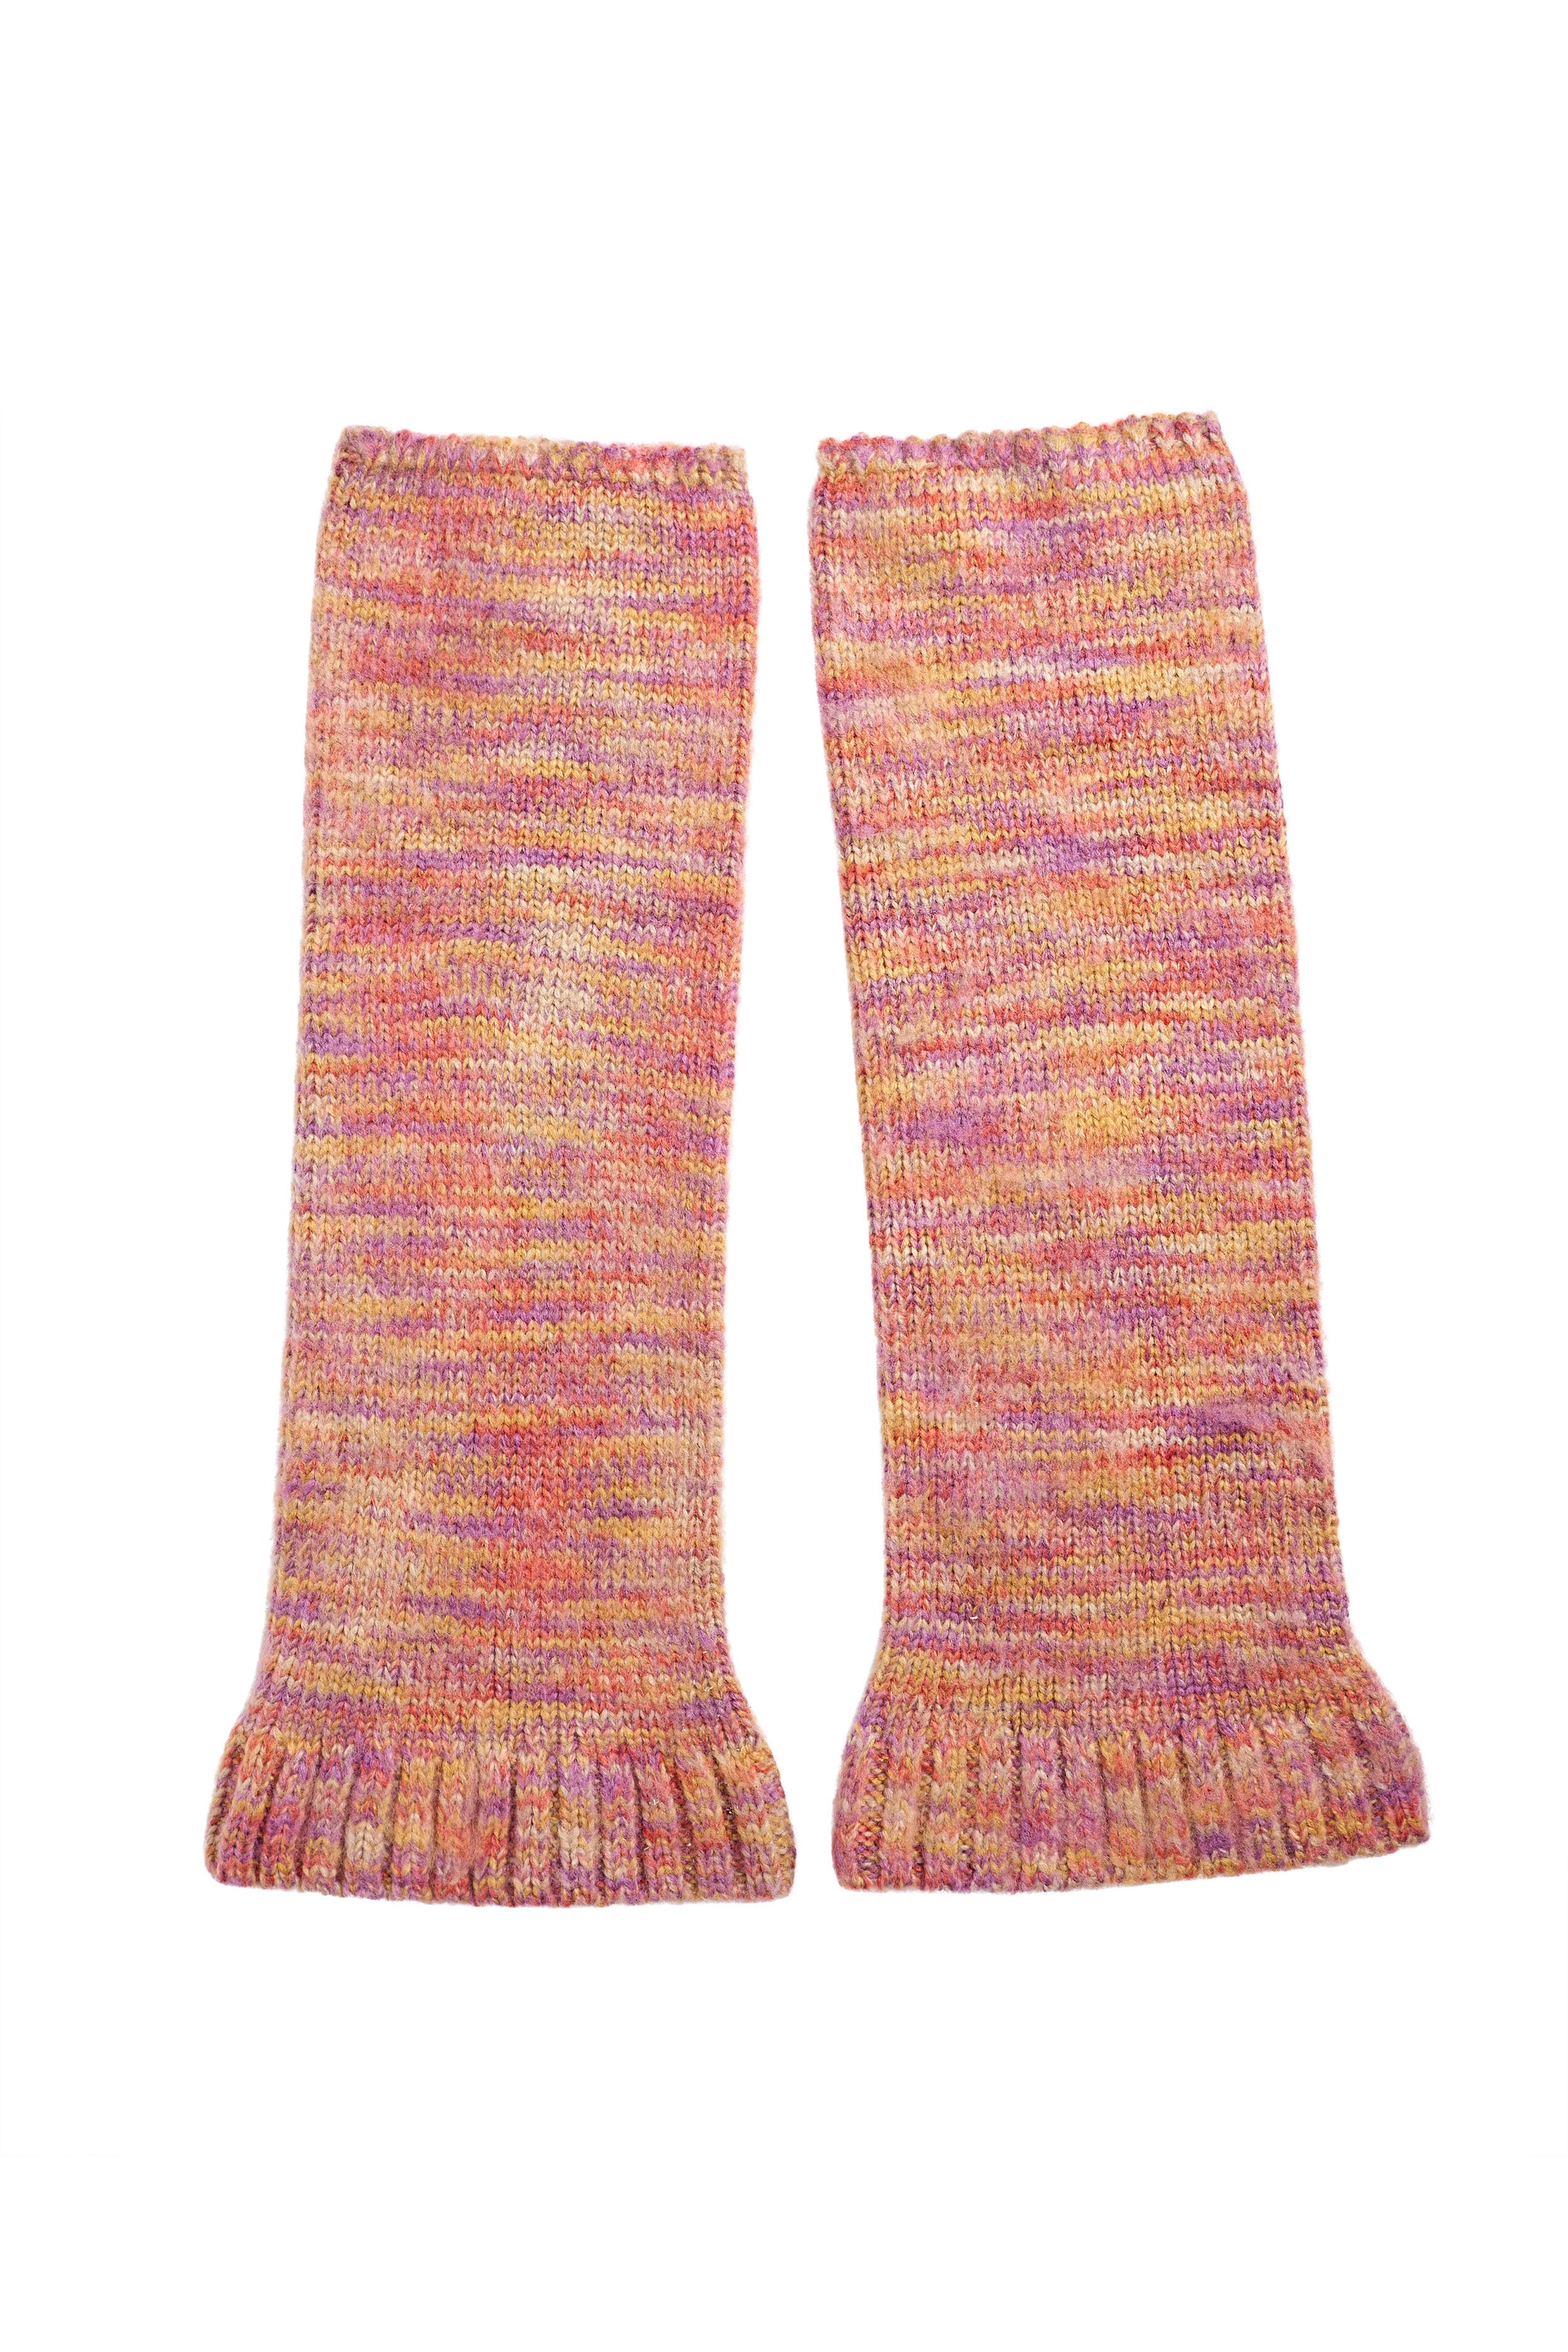 Crochet Trim Arm Warmers in Prisma